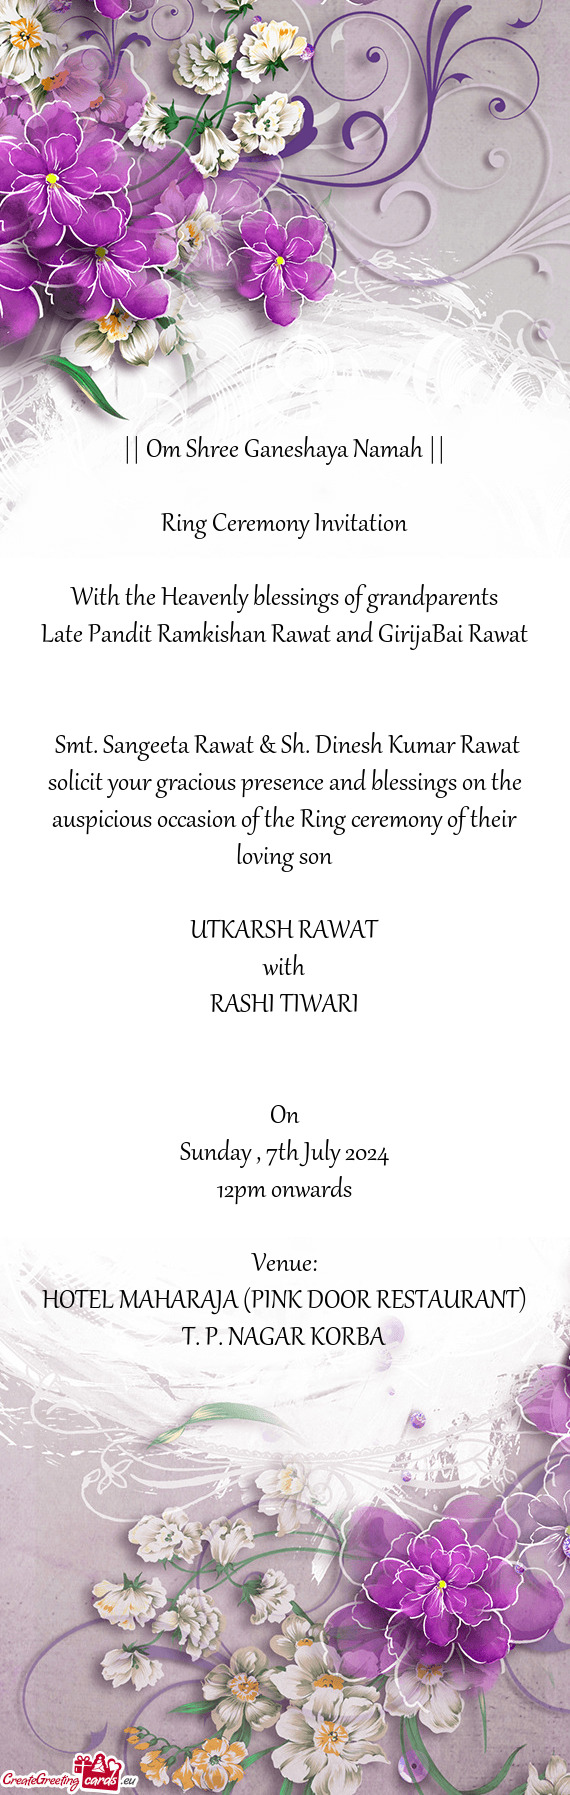 Late Pandit Ramkishan Rawat and GirijaBai Rawat